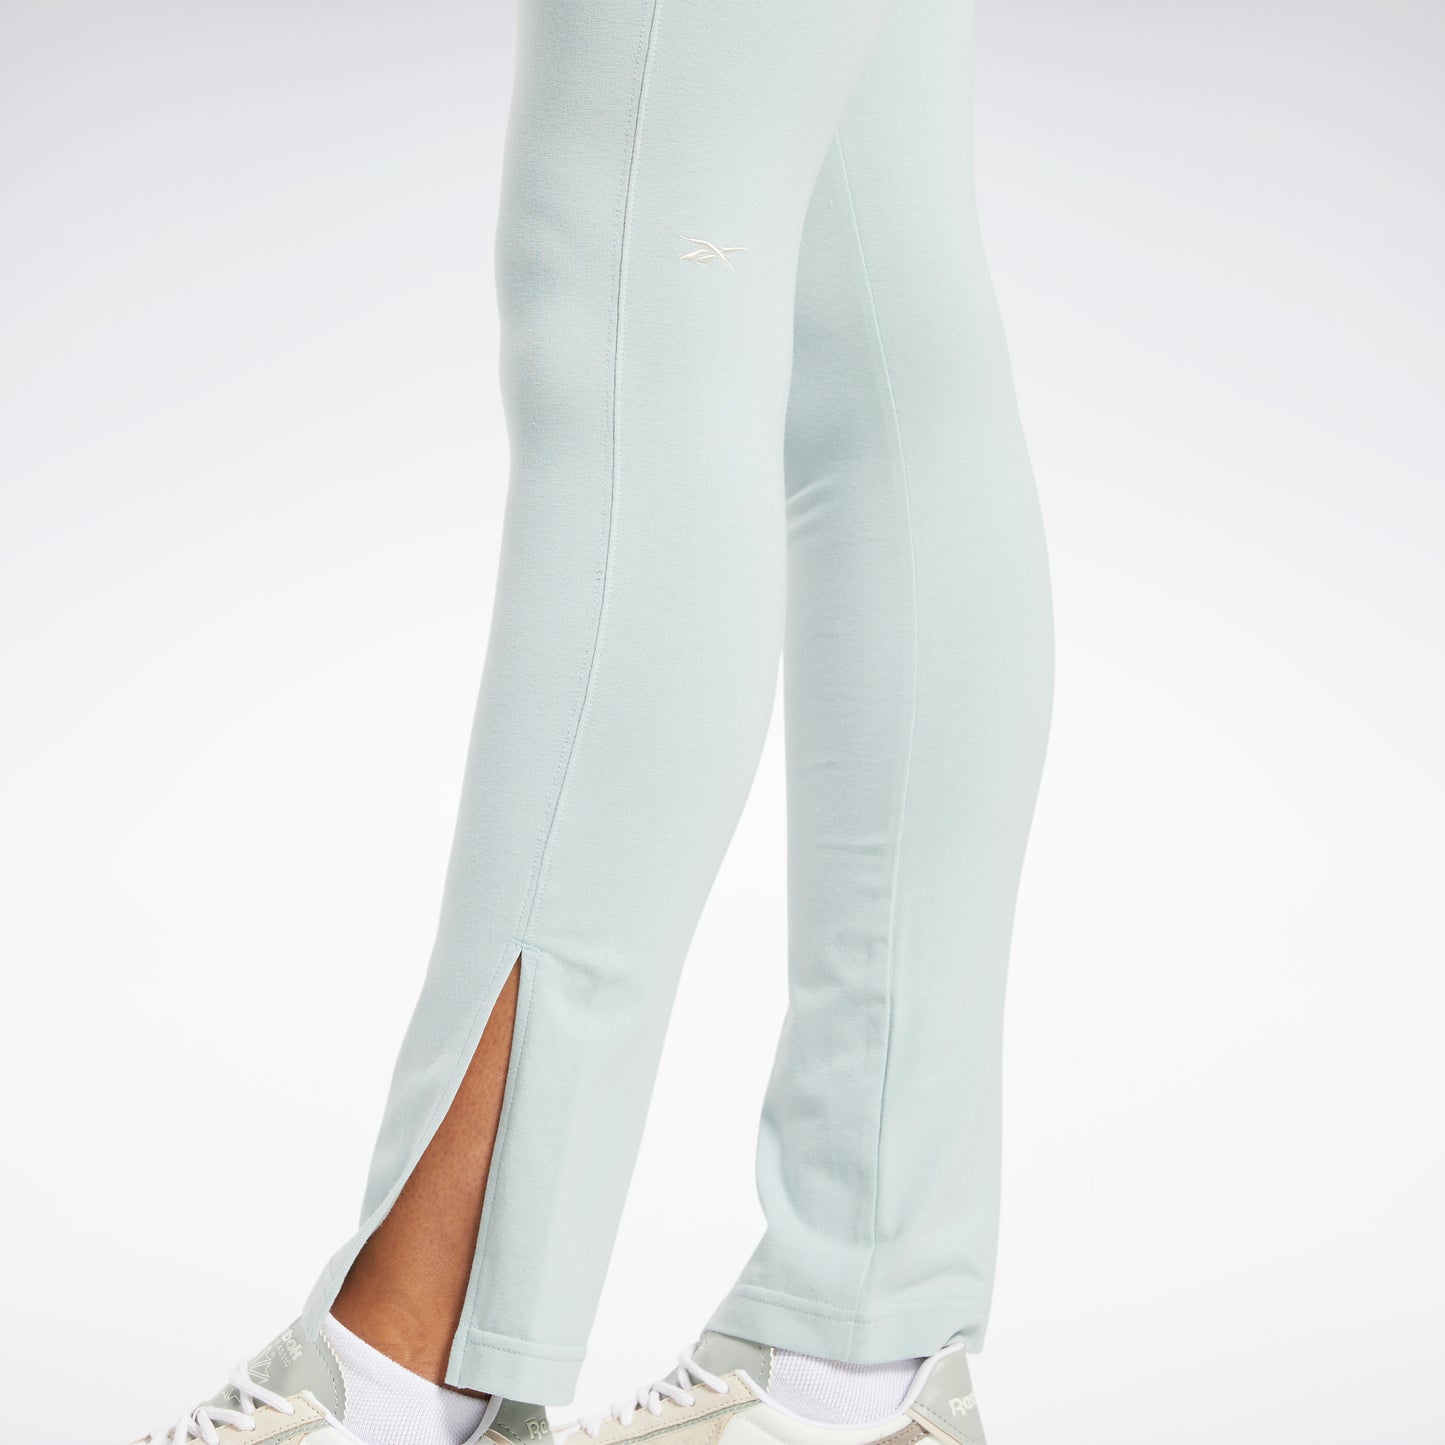 Reebok Women's Legging Full Length Performance Compression Pants